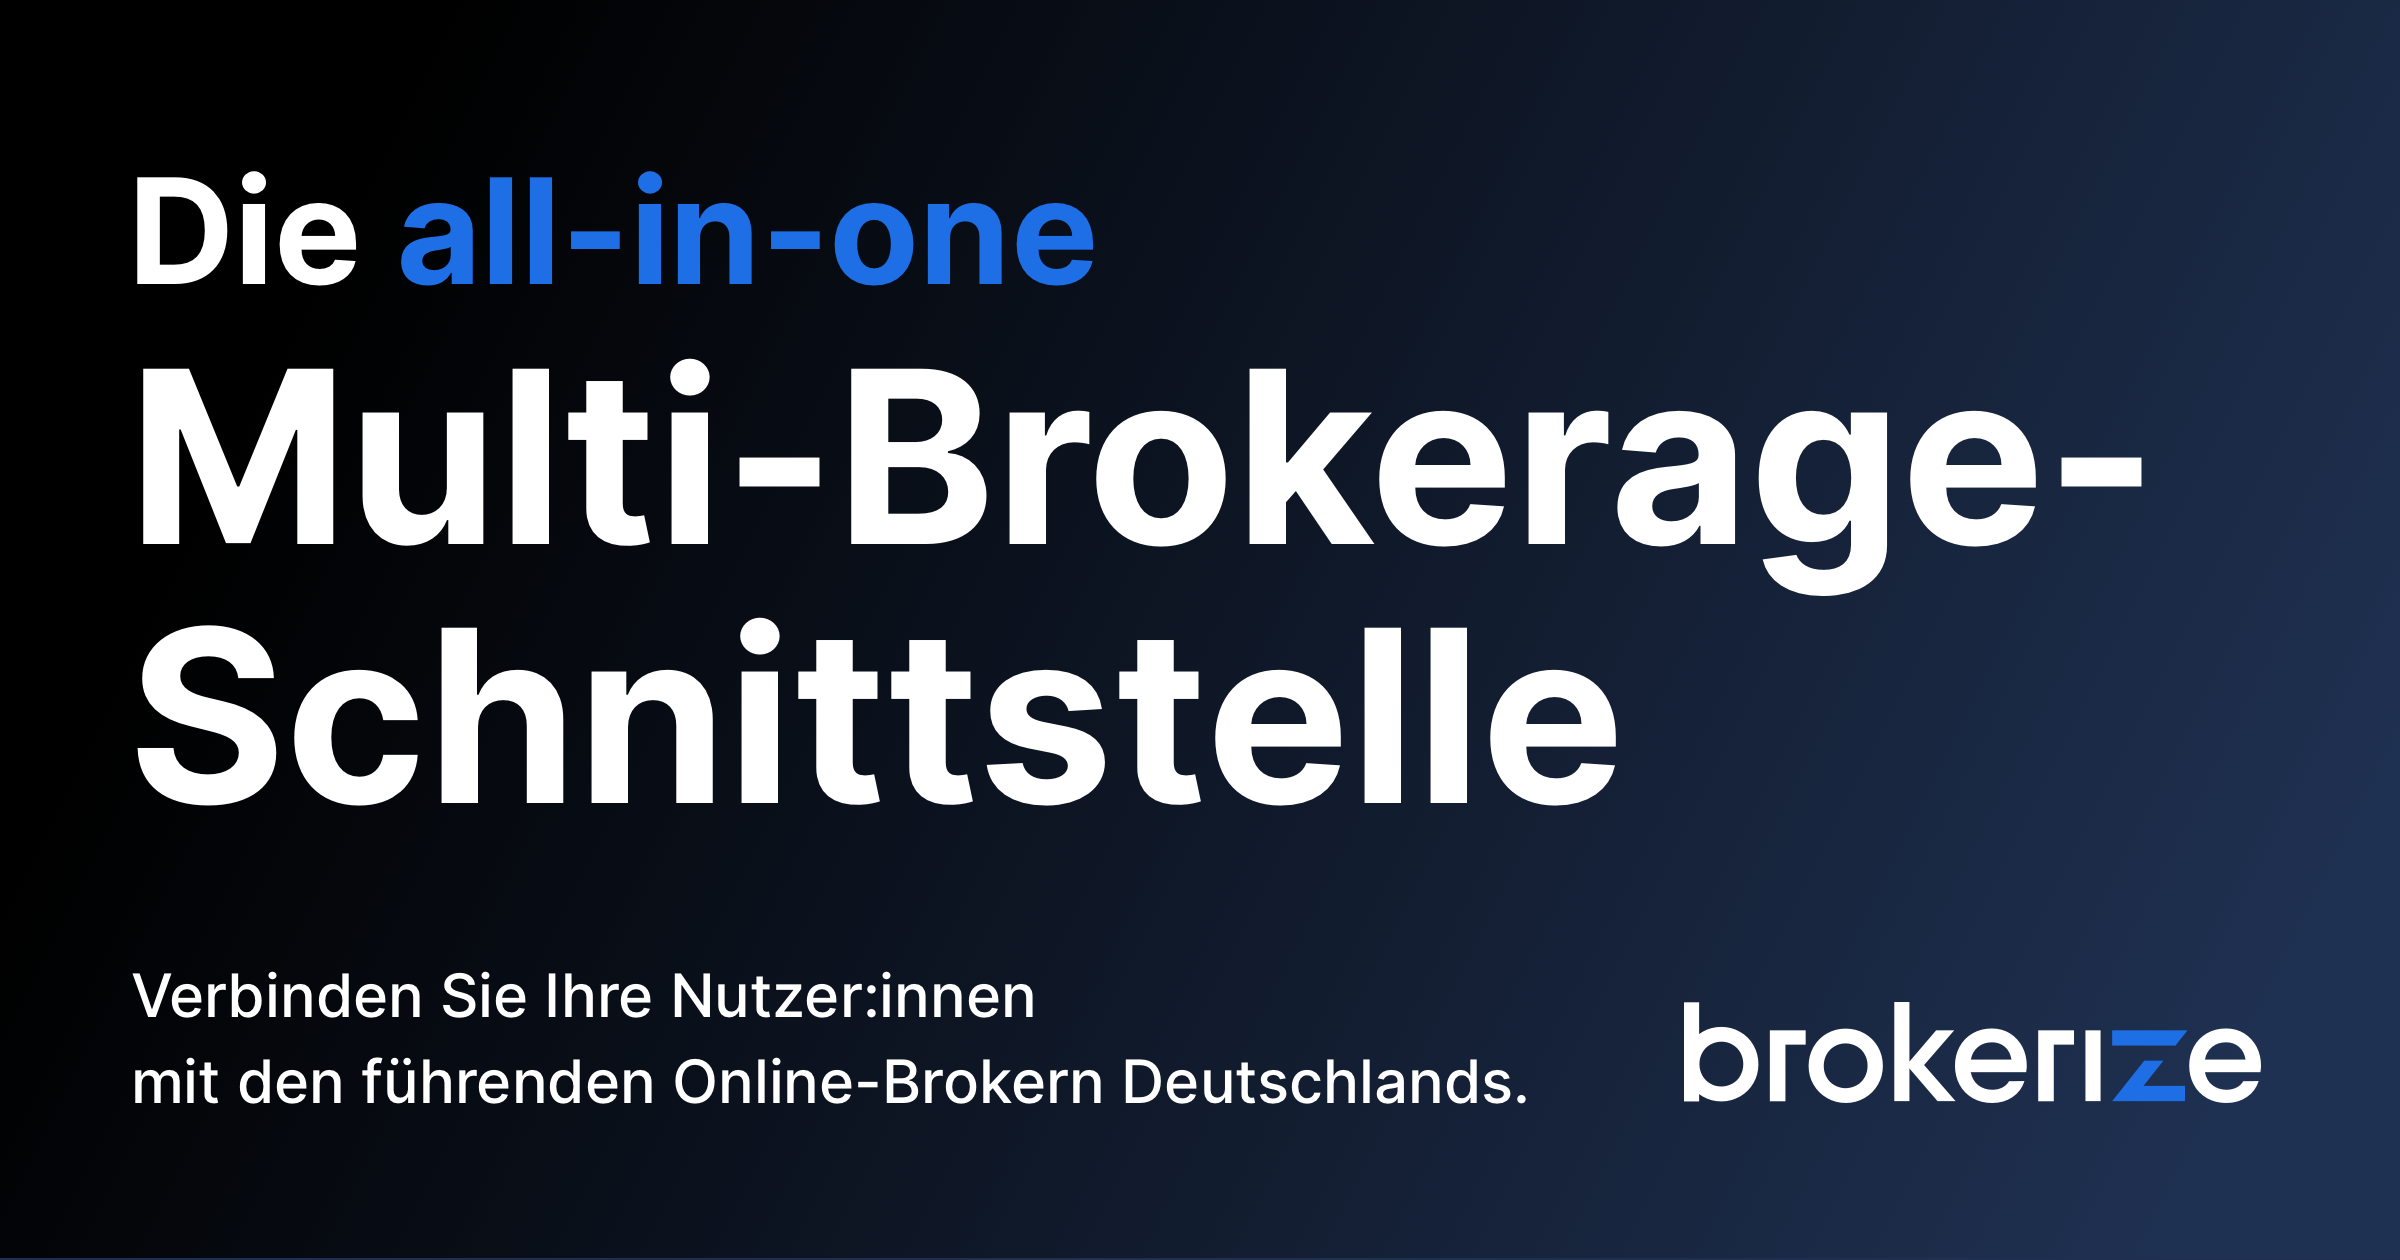 (c) Brokerize.com